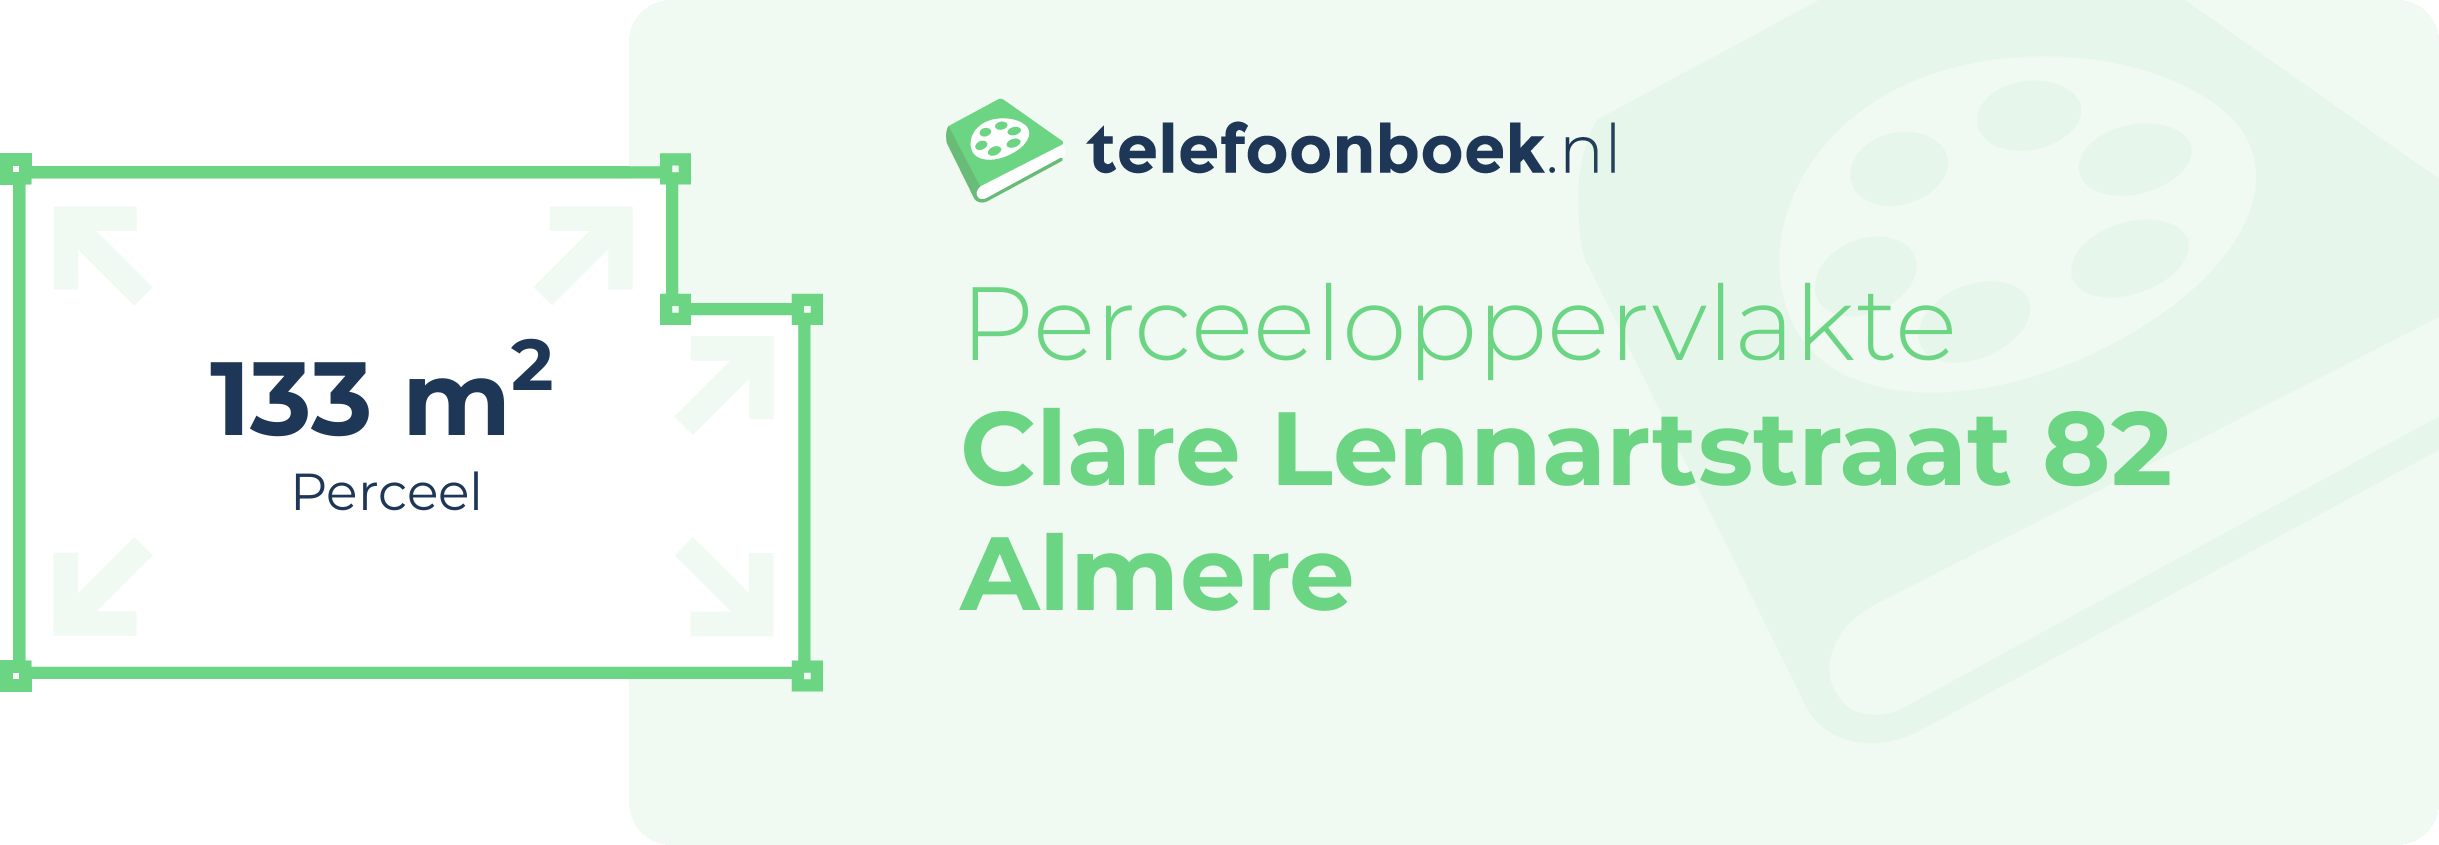 Perceeloppervlakte Clare Lennartstraat 82 Almere